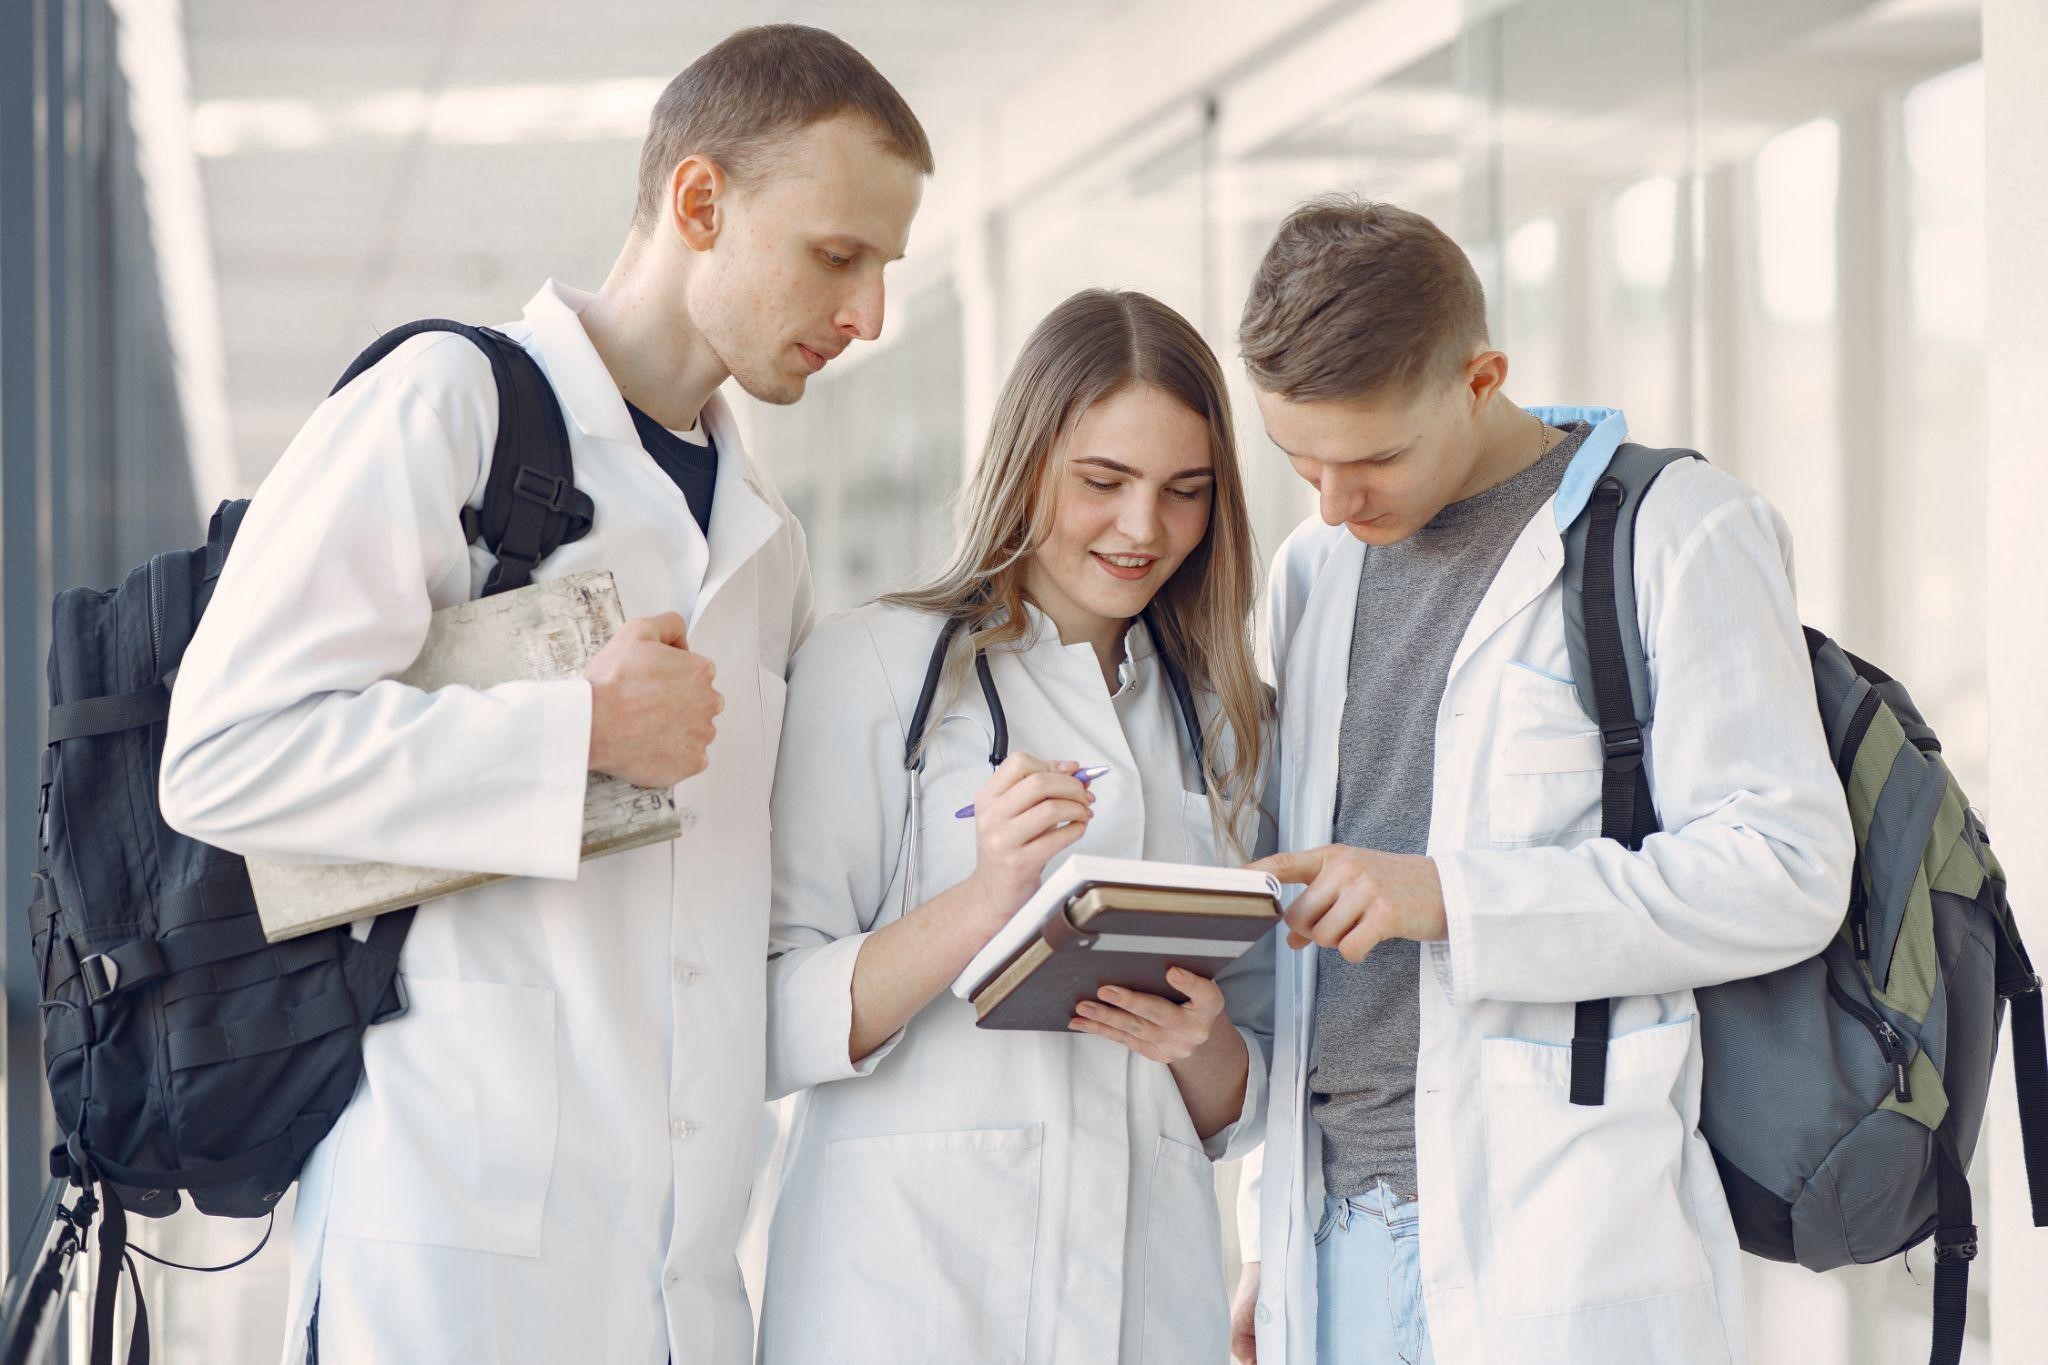 Three medical students looking at a note